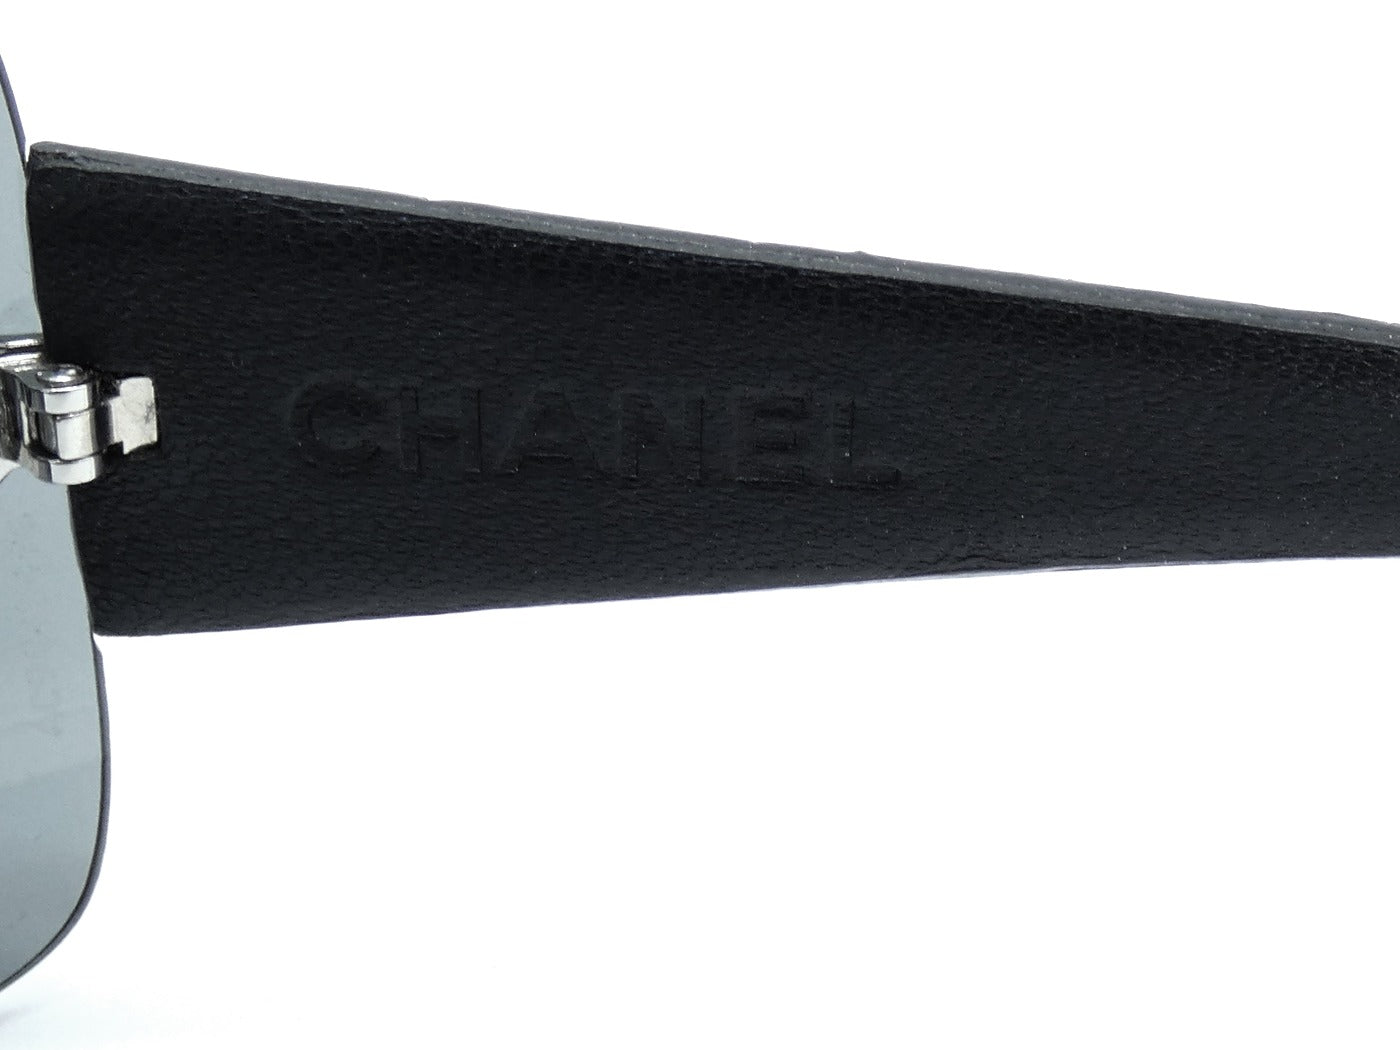 Chanel Cat Eye Sunglasses - Acetate, Tweed and Diamanté, Black - Polarized - UV Protected - Women's Sunglasses - 9129 C888/S6